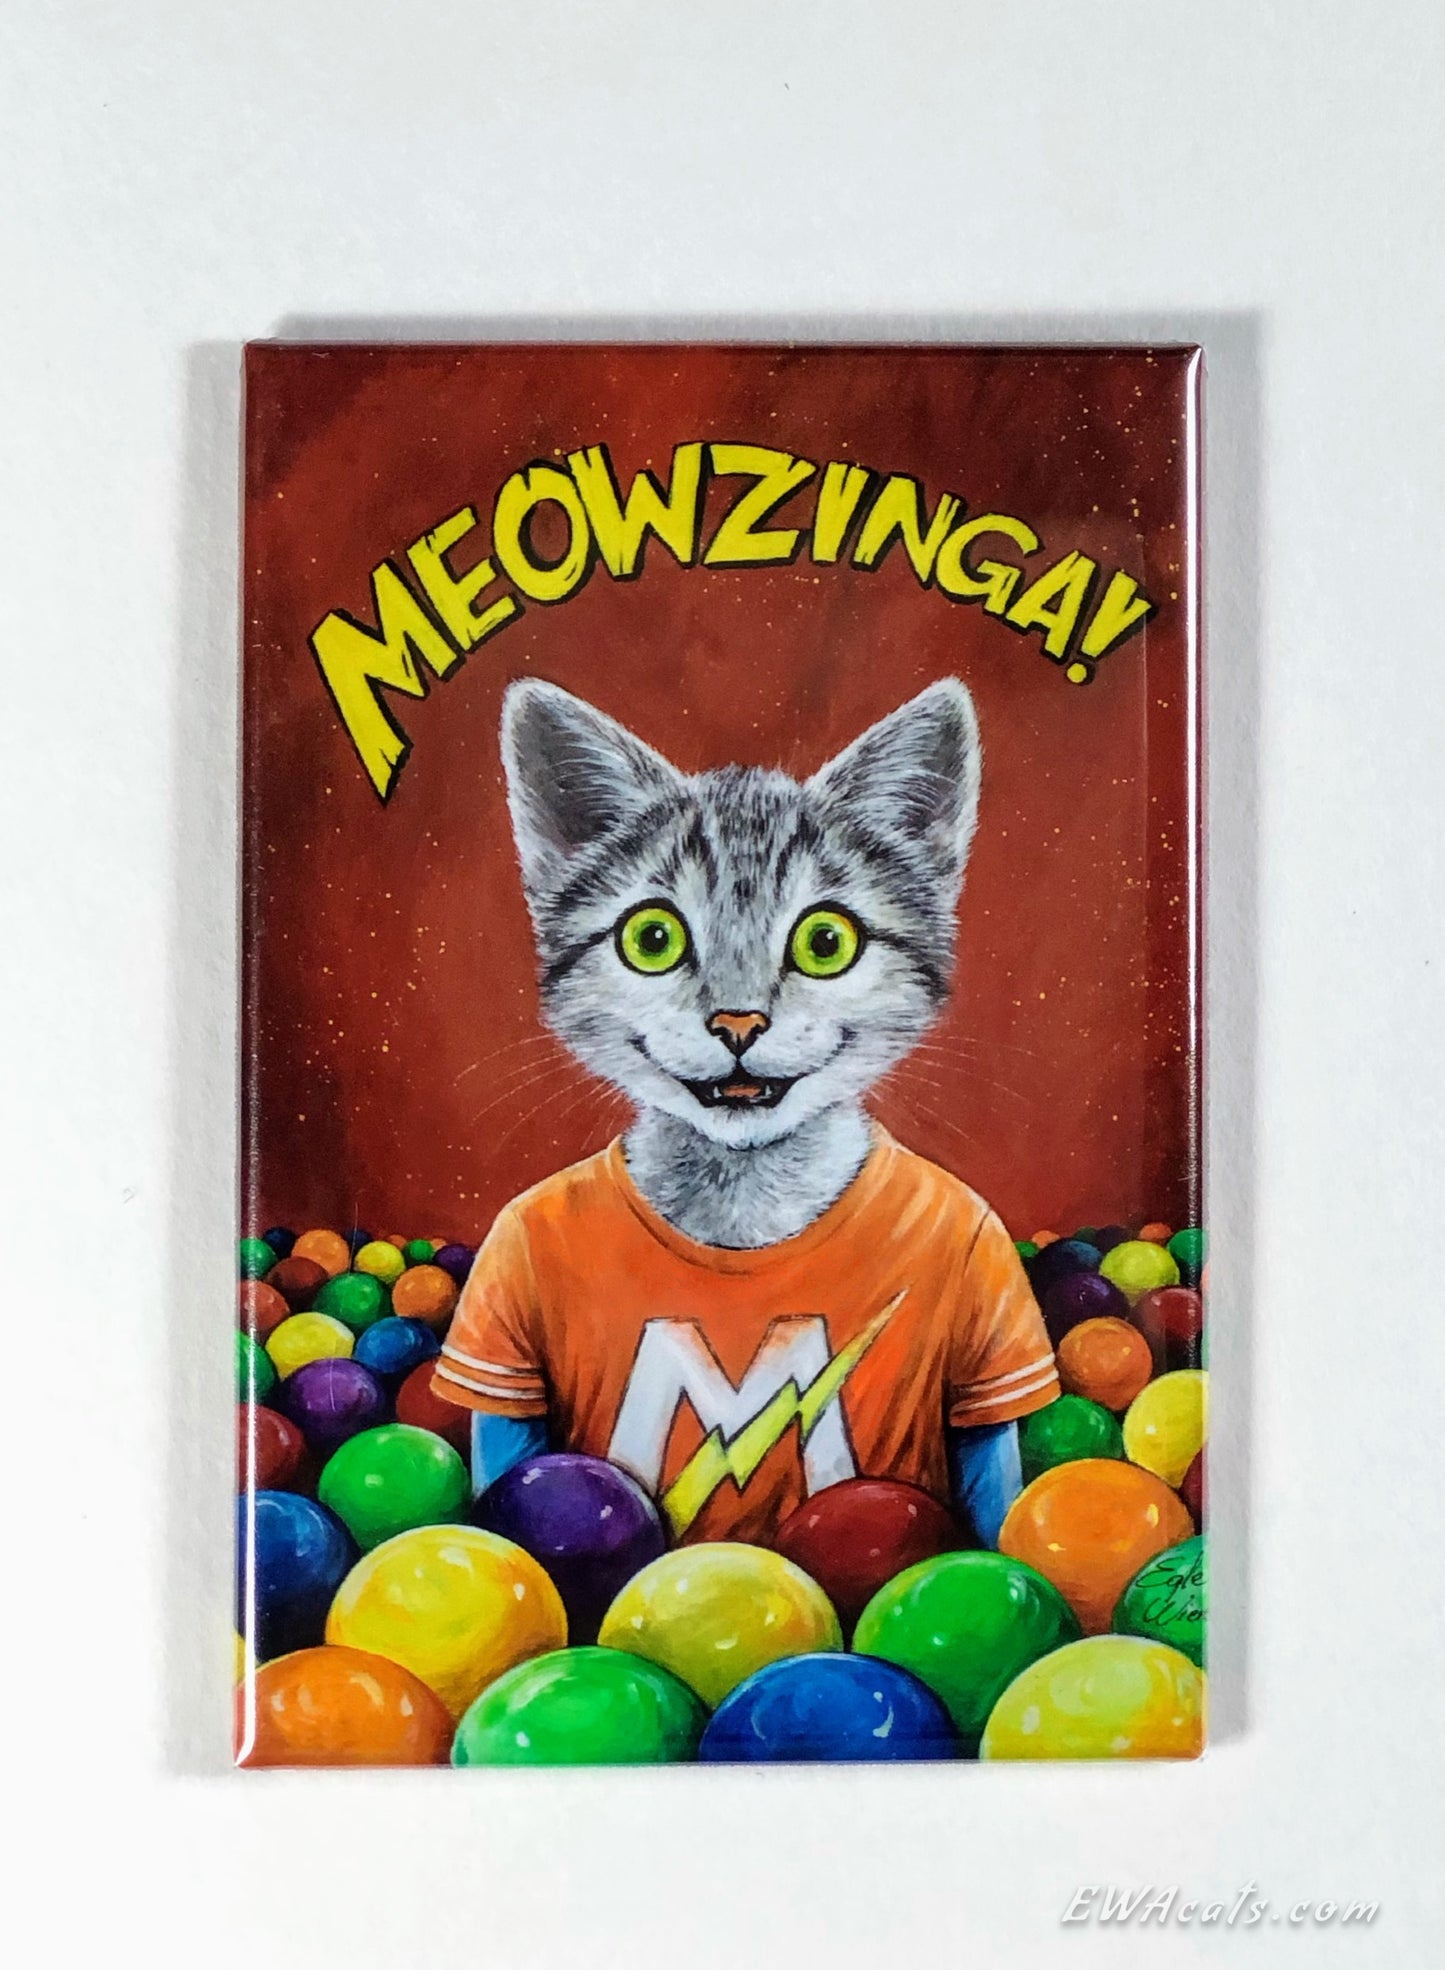 MAGNET 2"x 3" Rectangle "Meowzinga!"